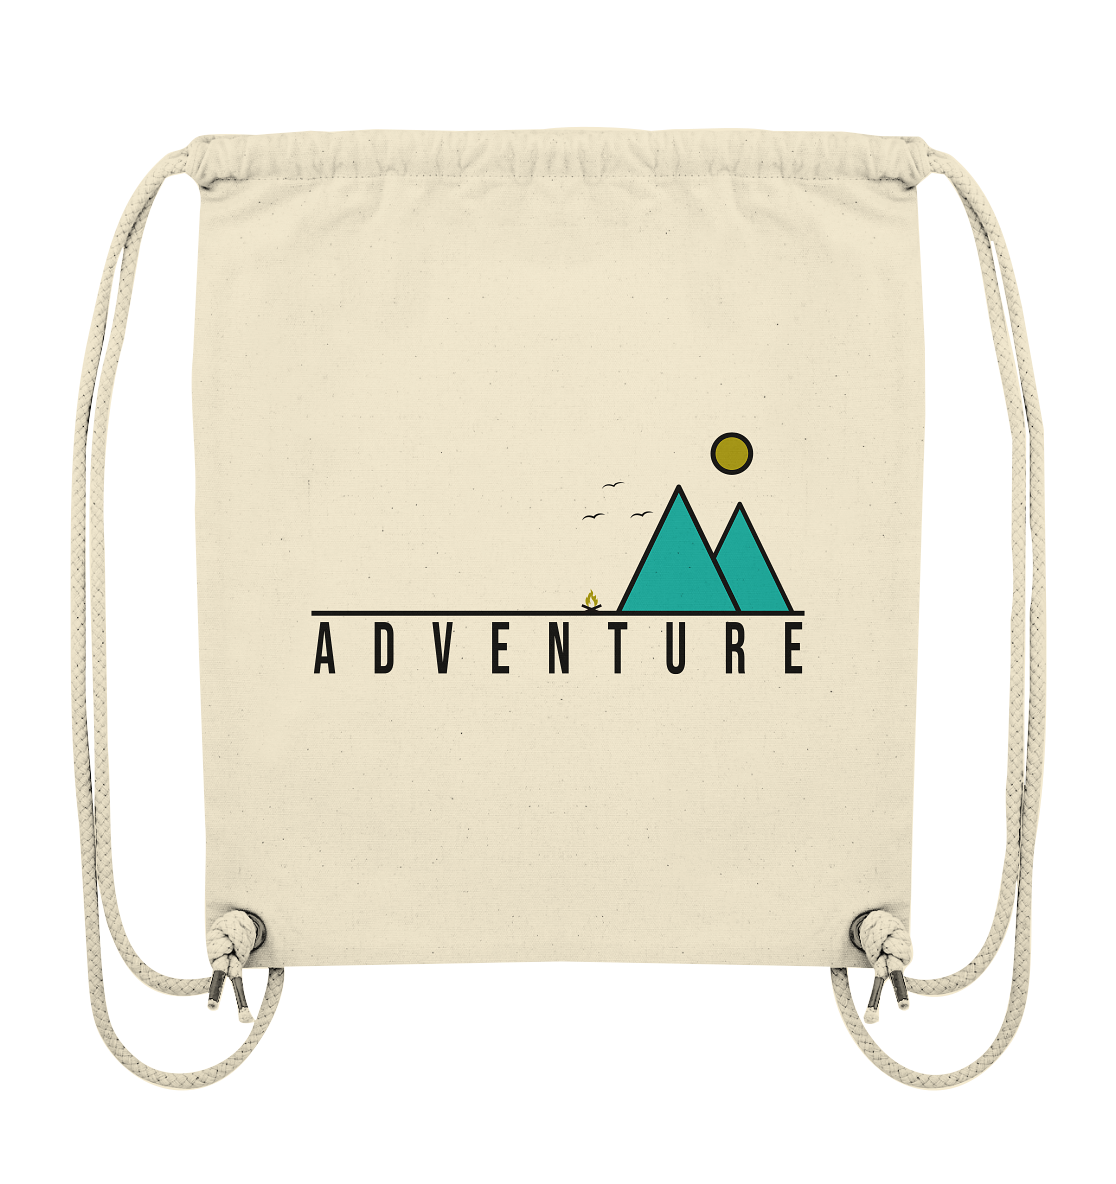 Adventure - Organic Gym-Bag